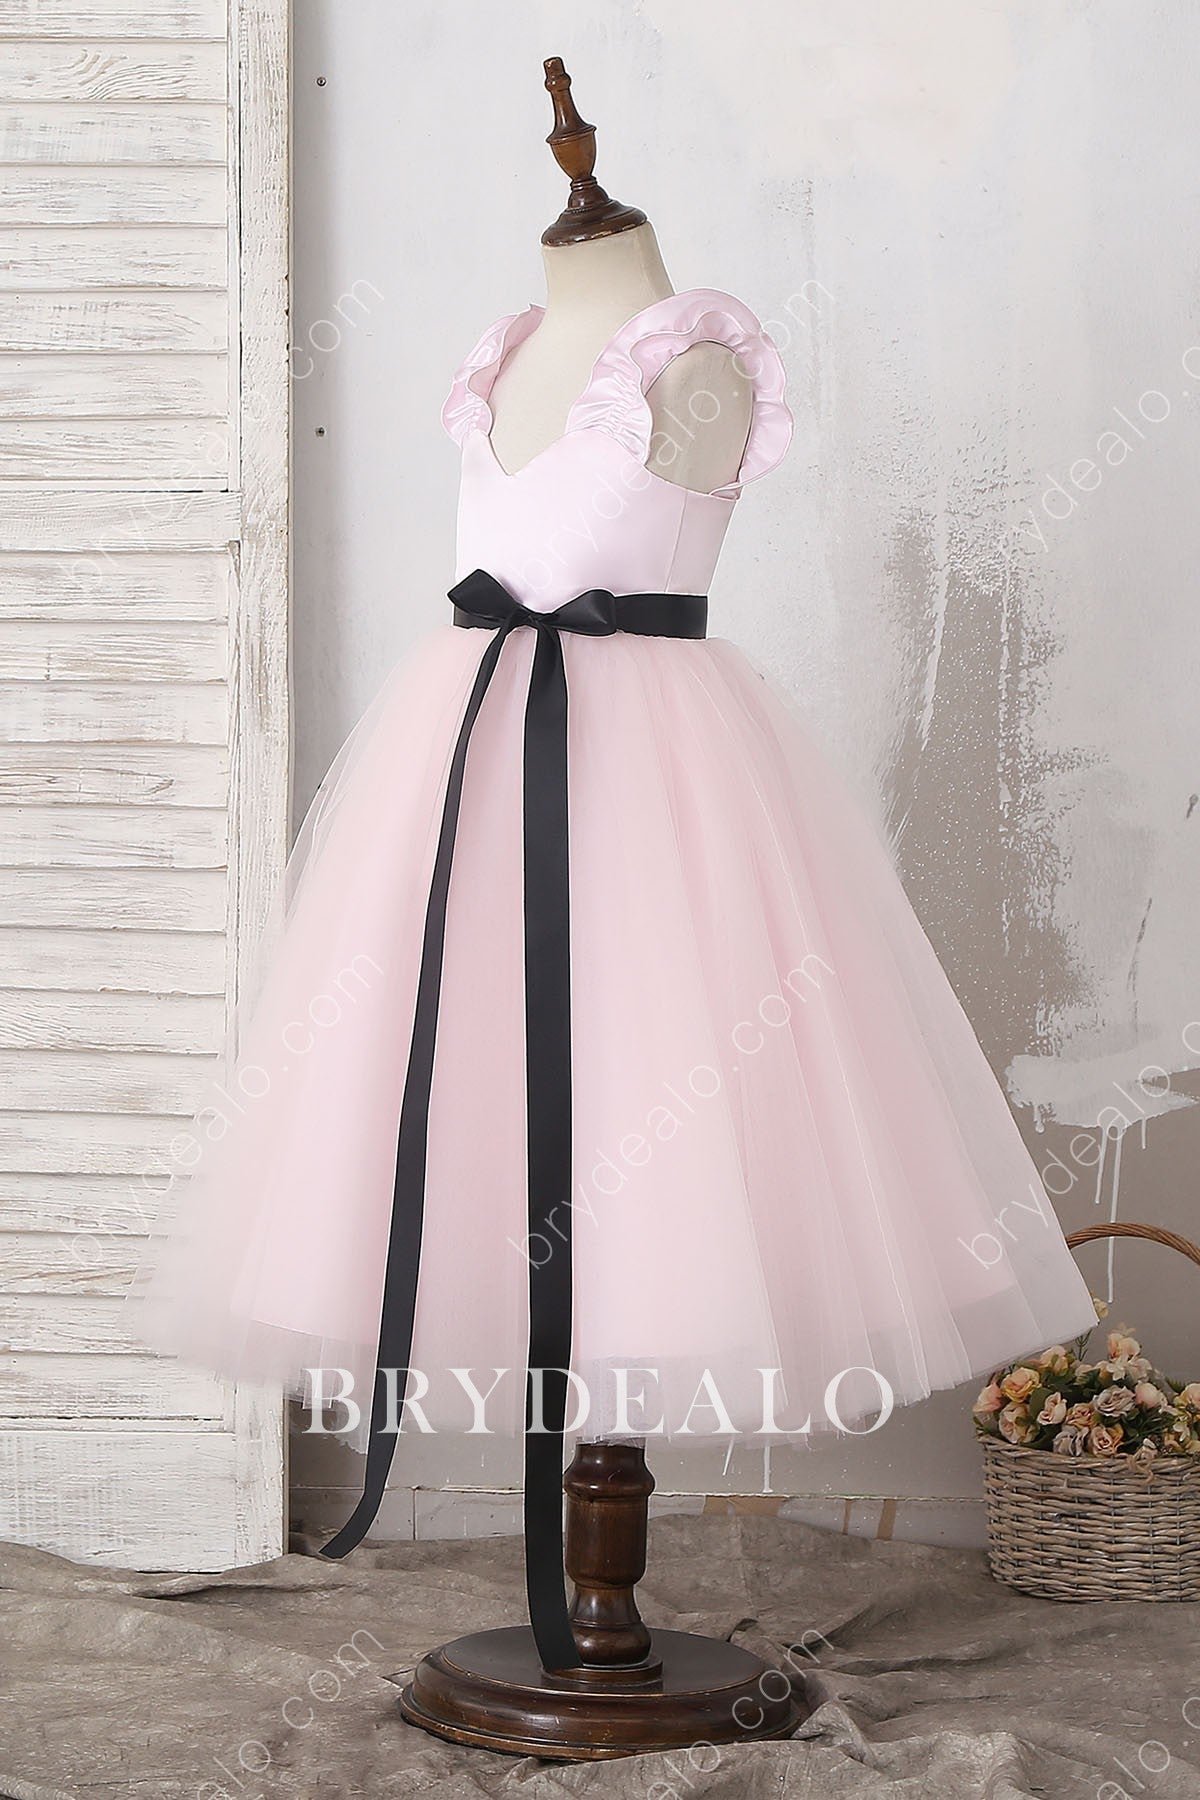 black bowknot sash pink satin tulle flower girl gown